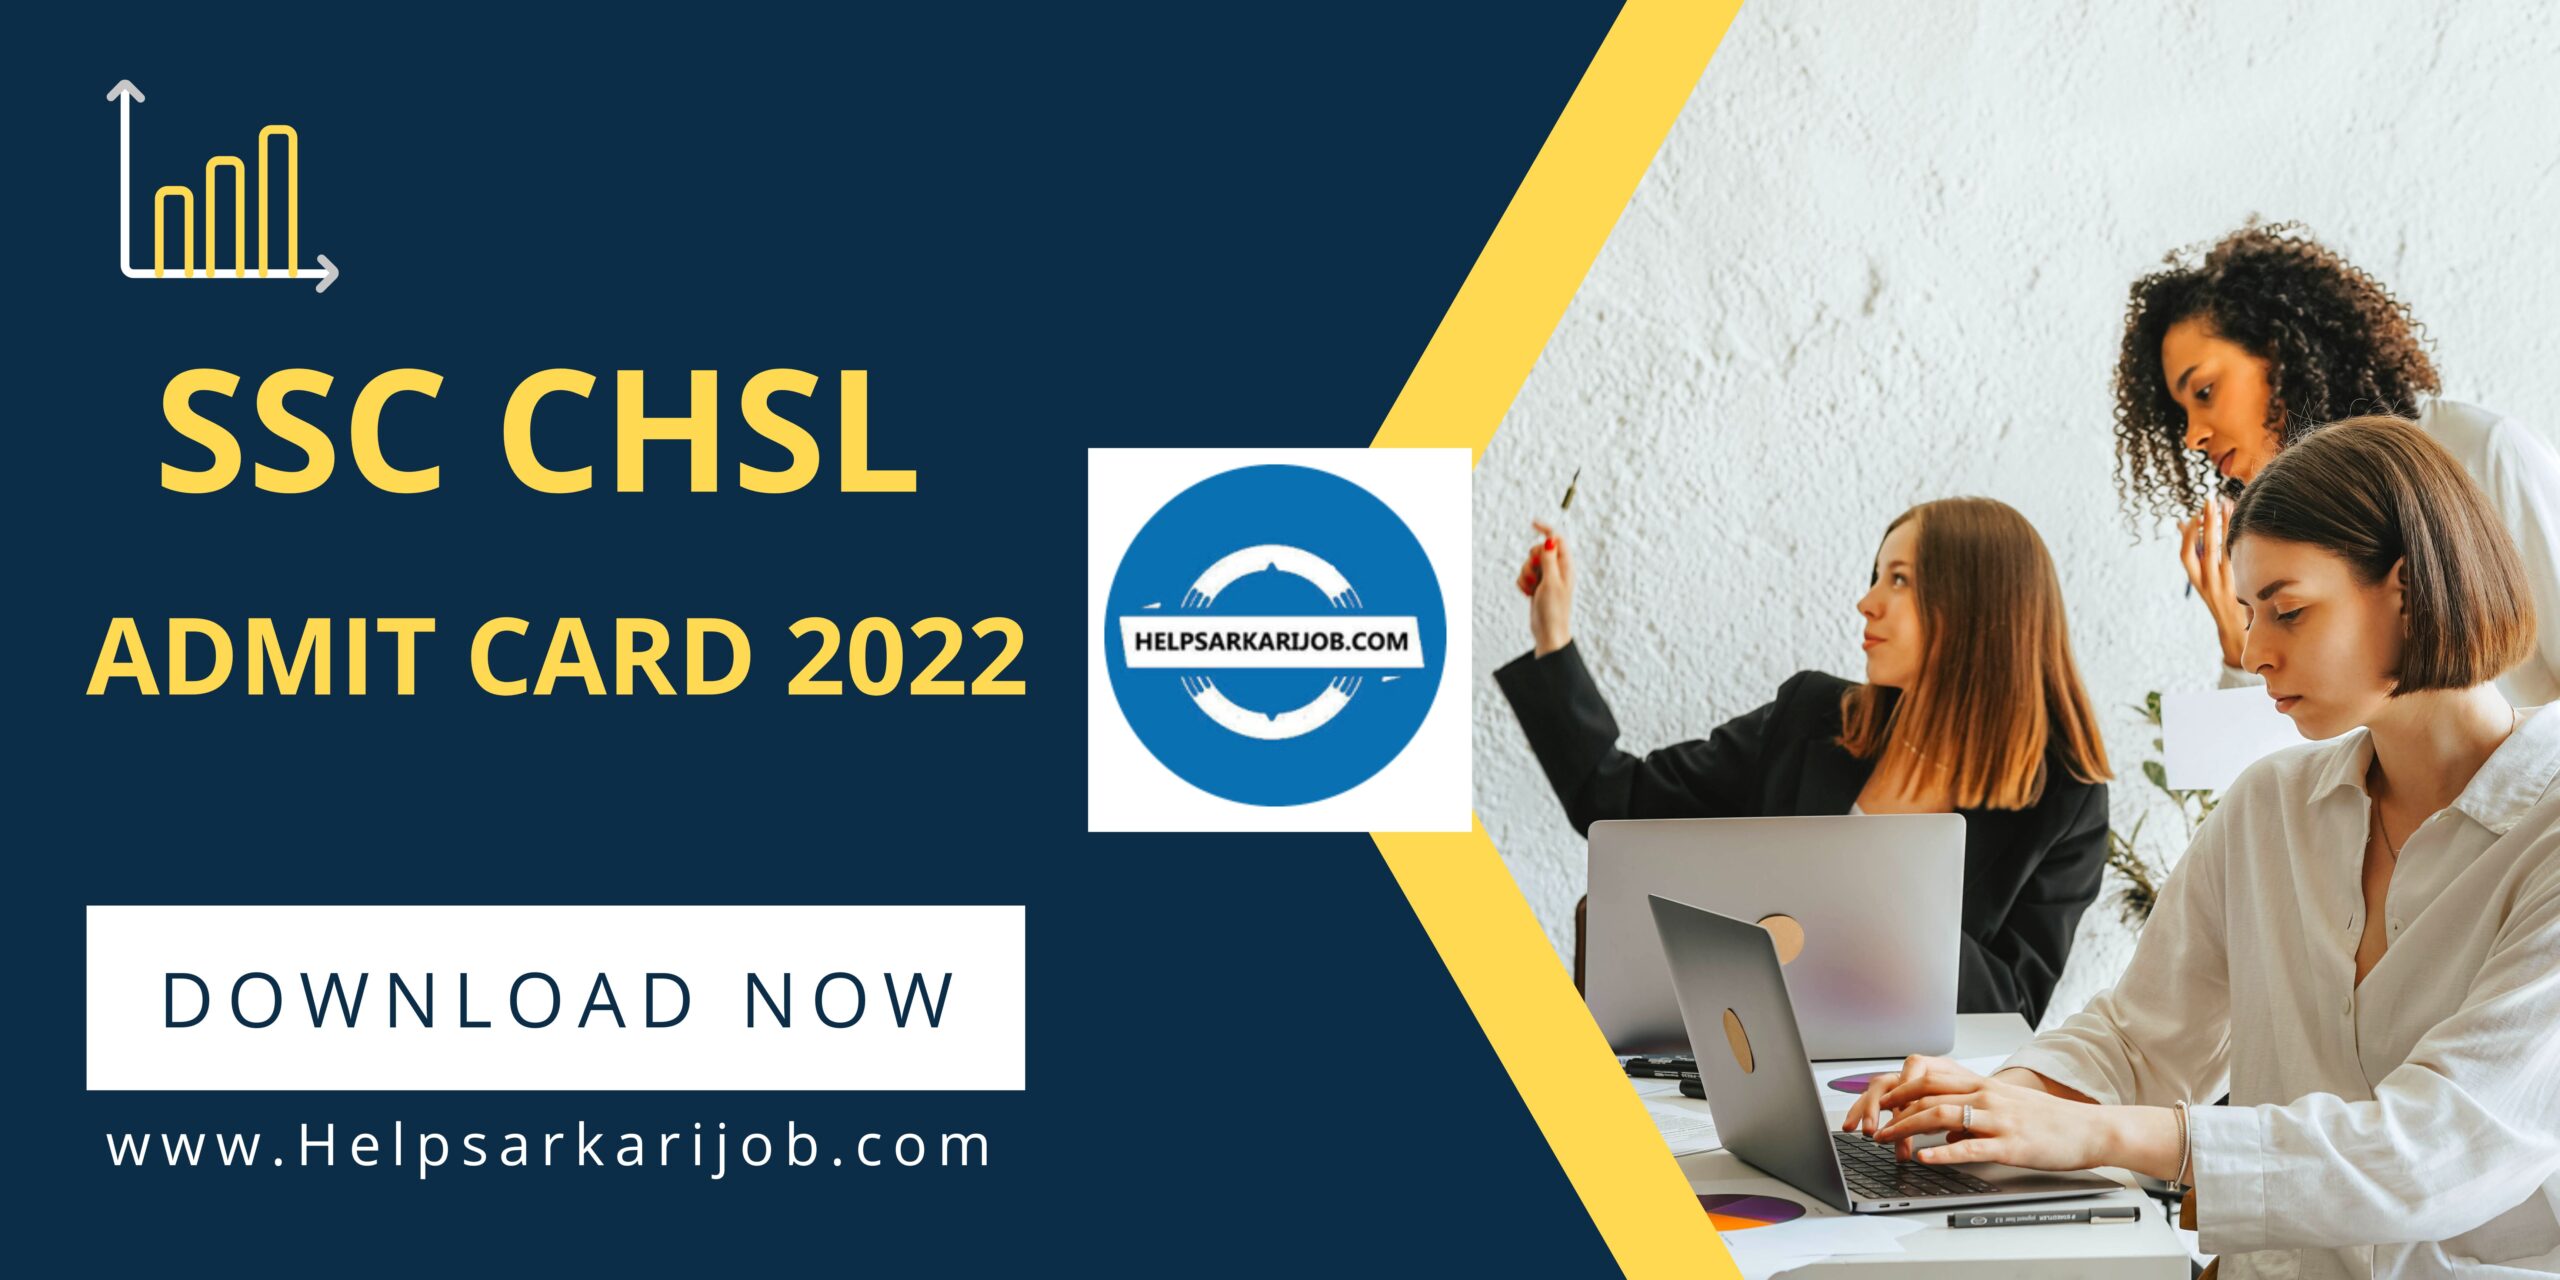 SSC CHSL Admit Card 2022 scaled -